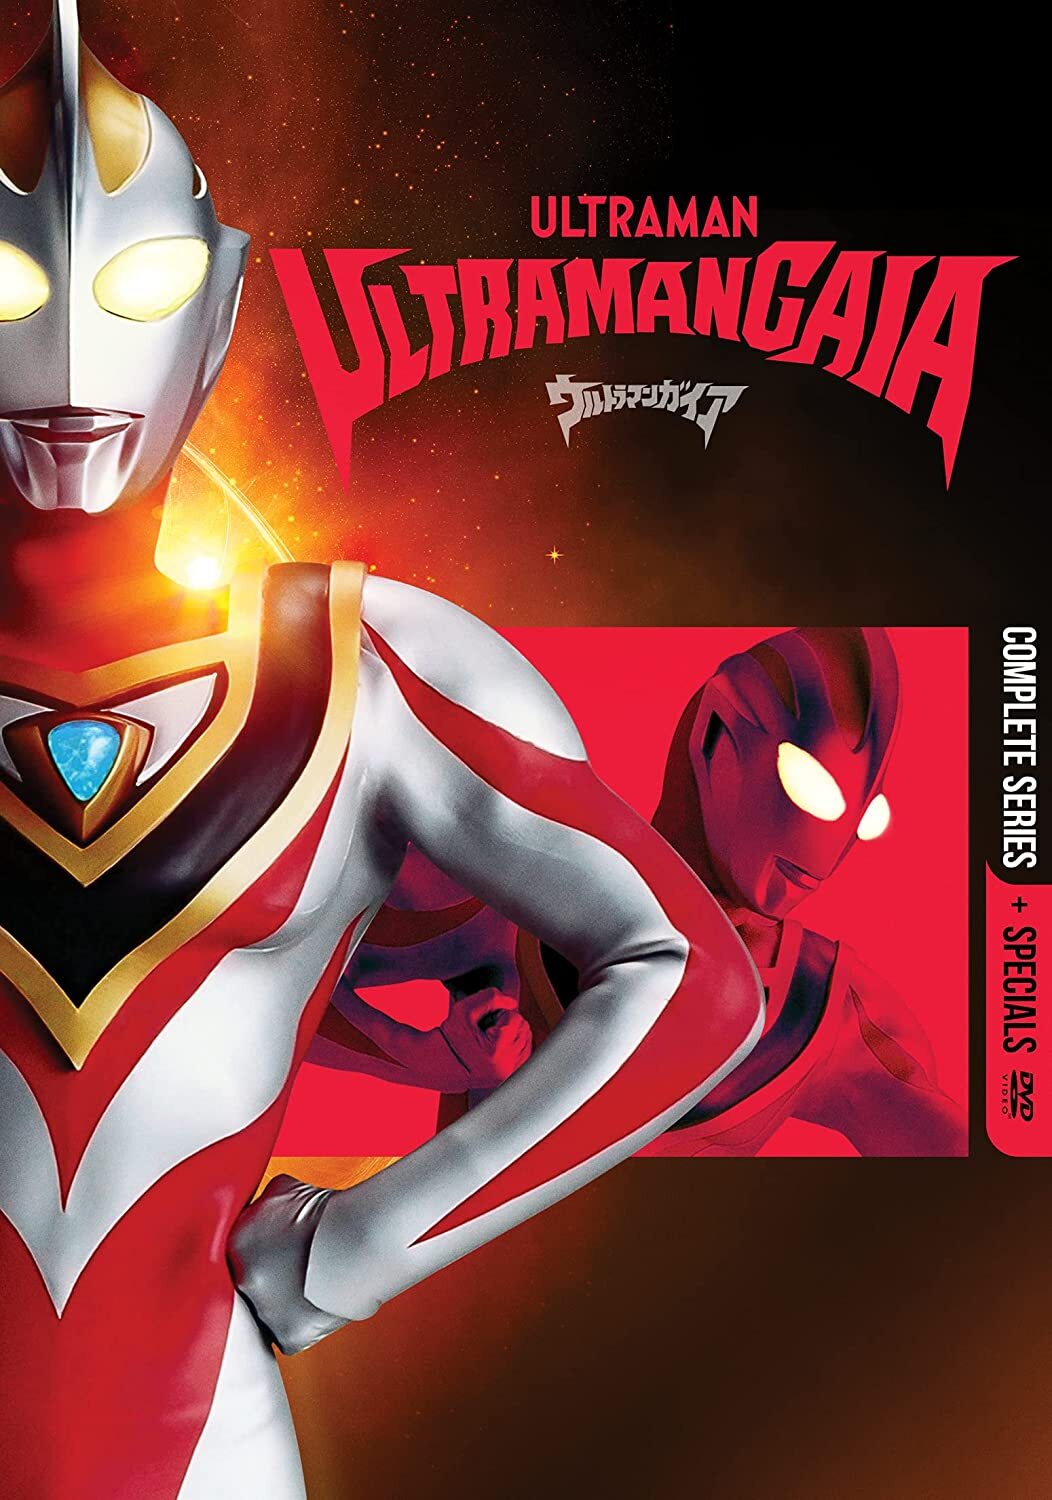 Ultraman Gaia: The Complete Series + Specials DVD (Ultraman Gaia